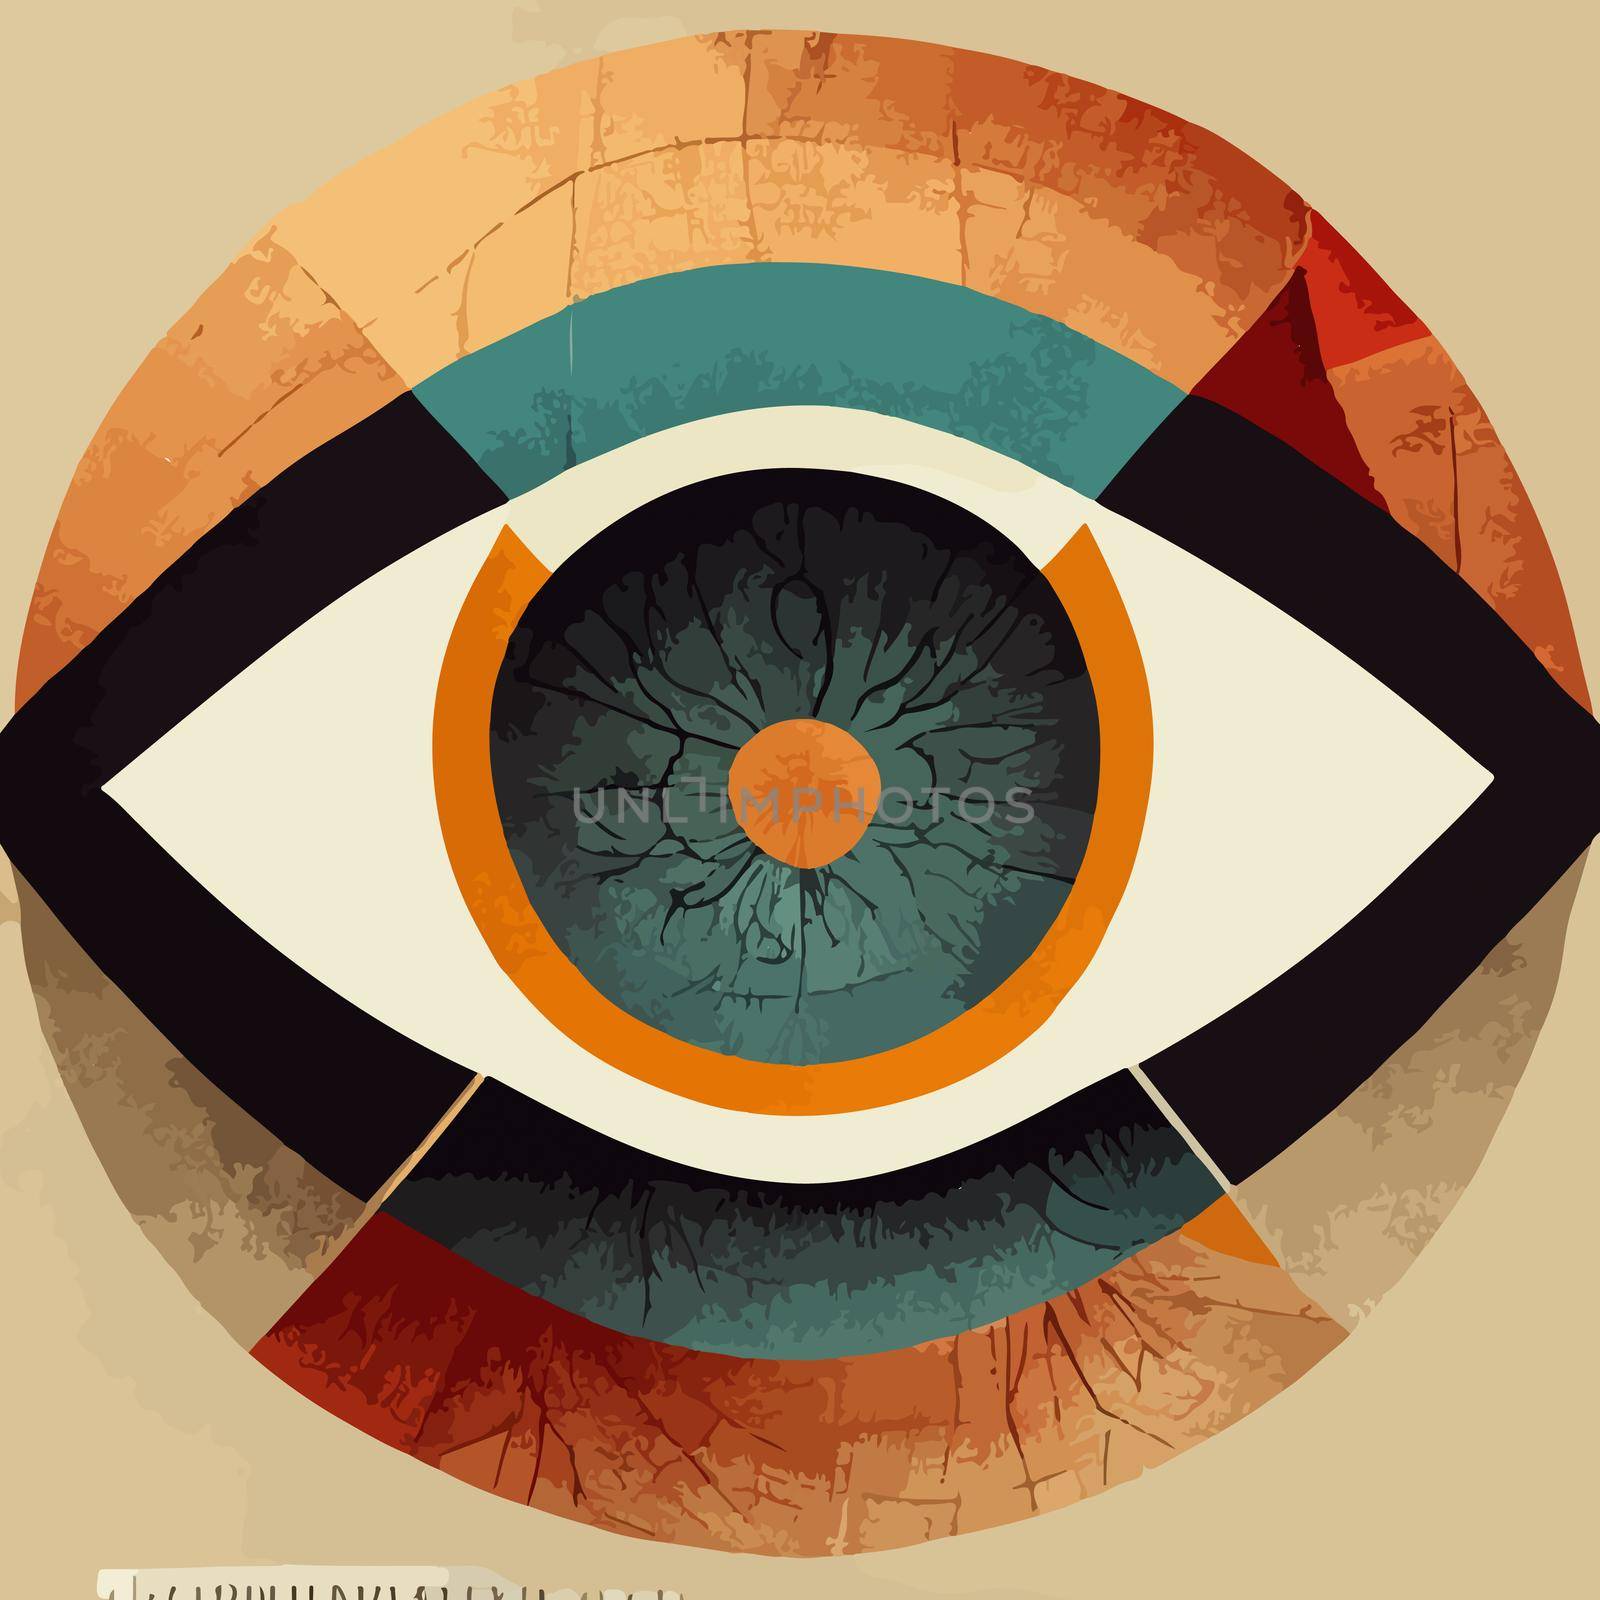 eye pattern geometry background. abstract geometric background. colorful geometric illustration. by JpRamos